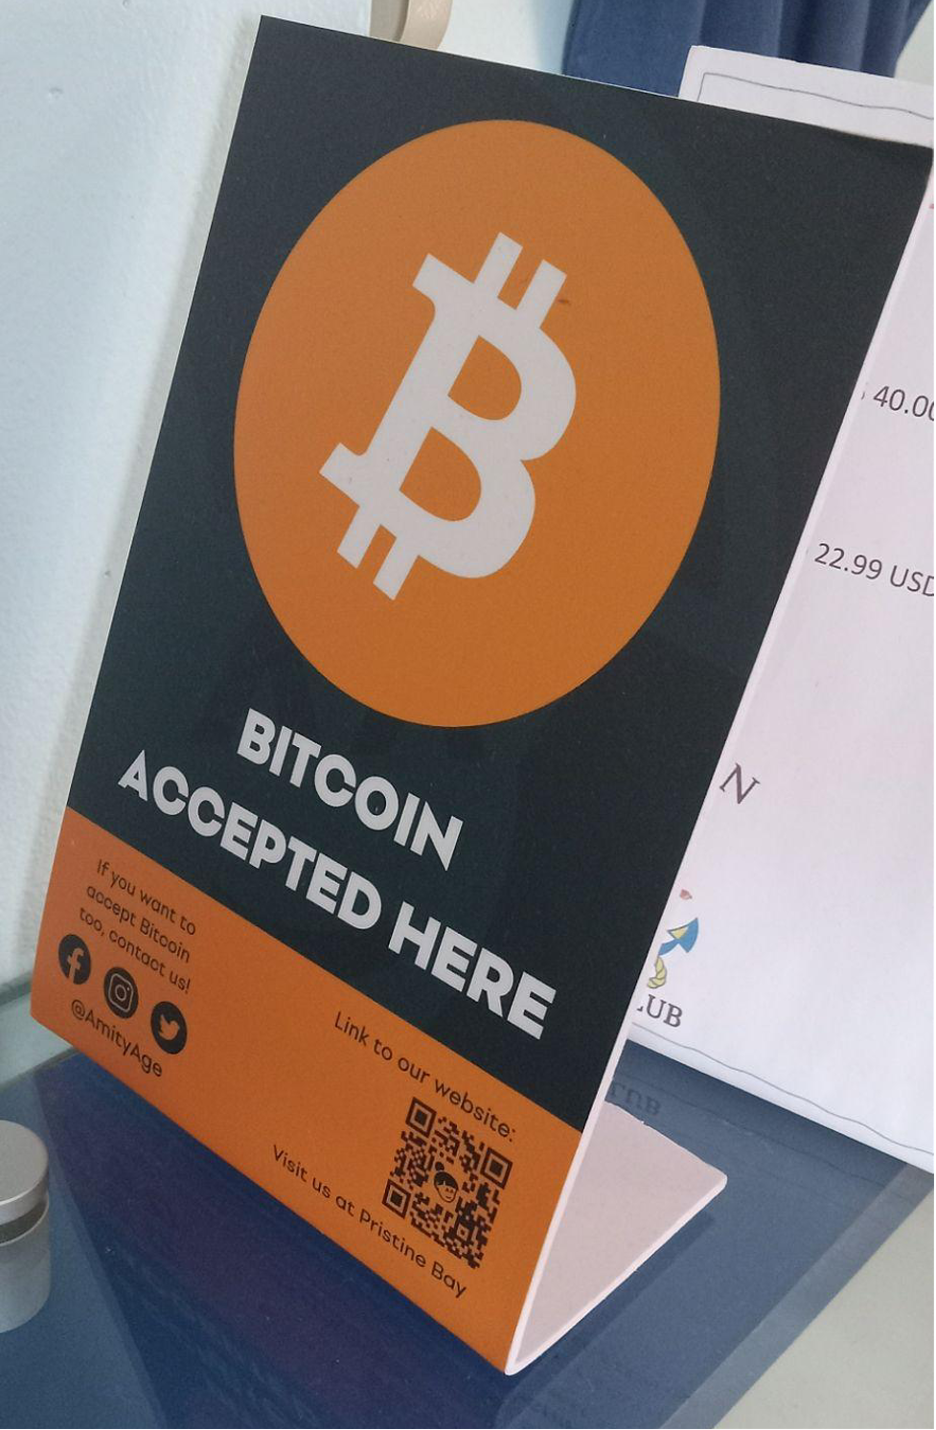 bitcoin accepted